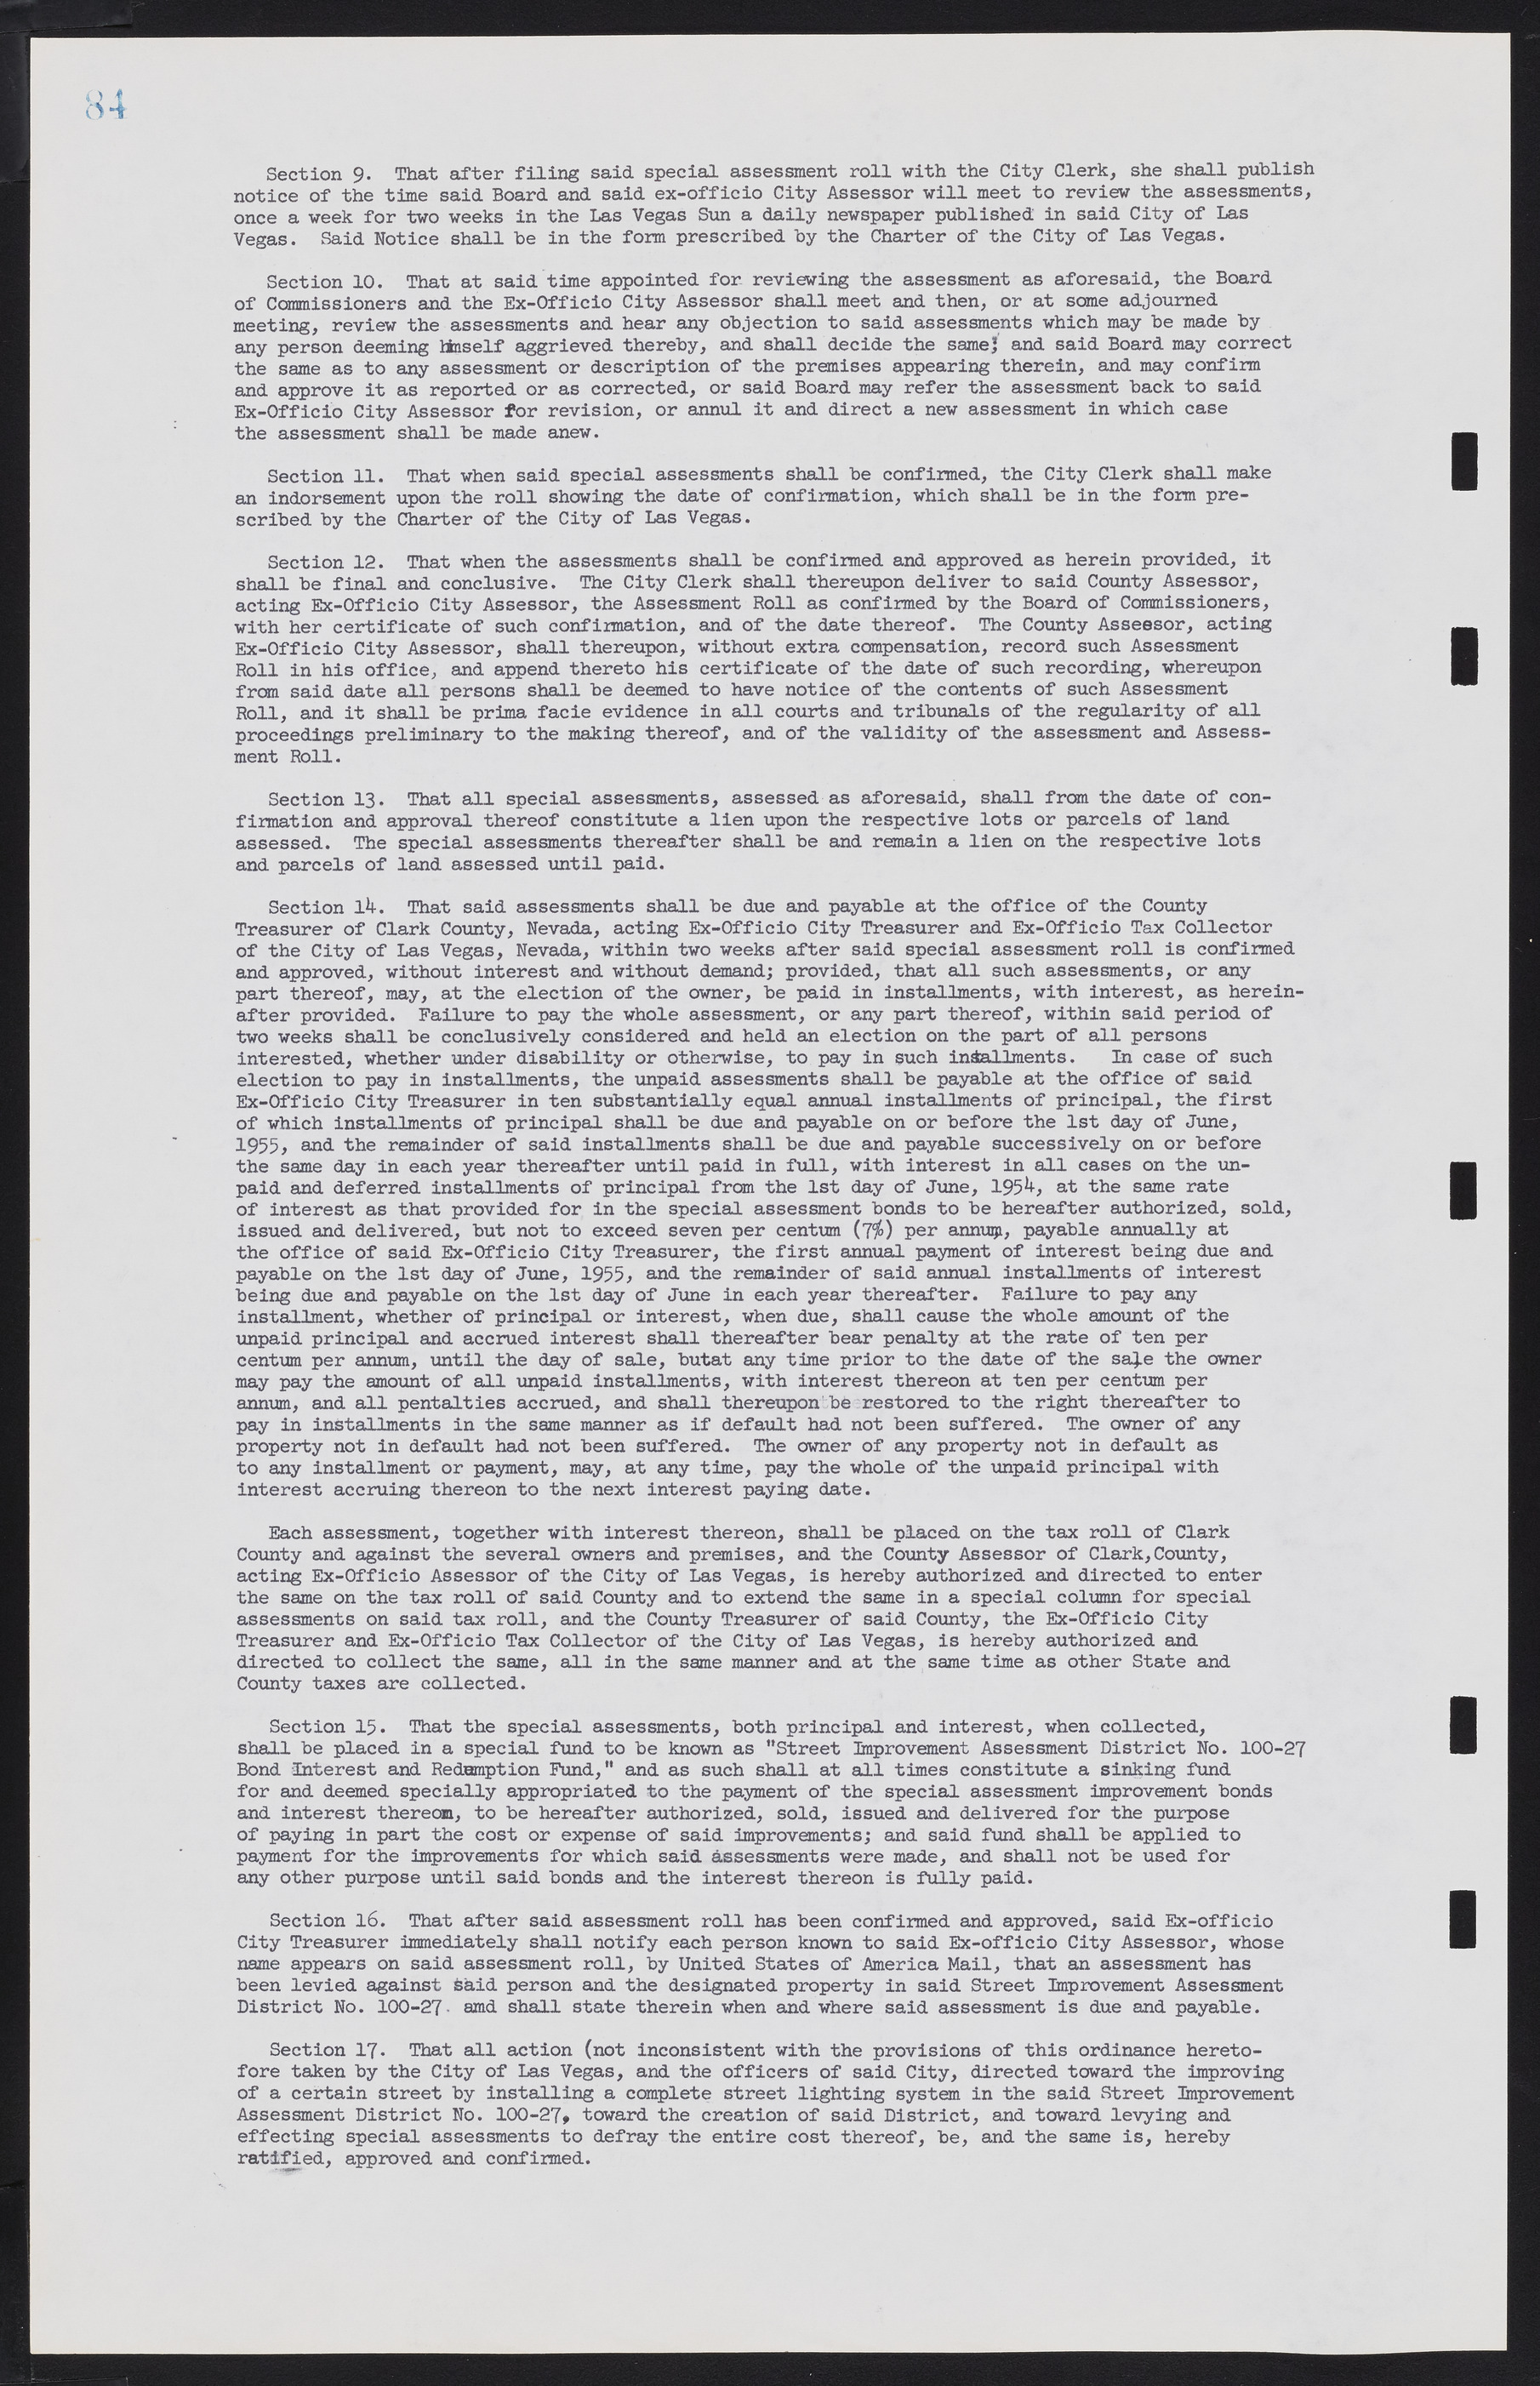 Las Vegas City Commission Minutes, February 17, 1954 to September 21, 1955, lvc000009-88